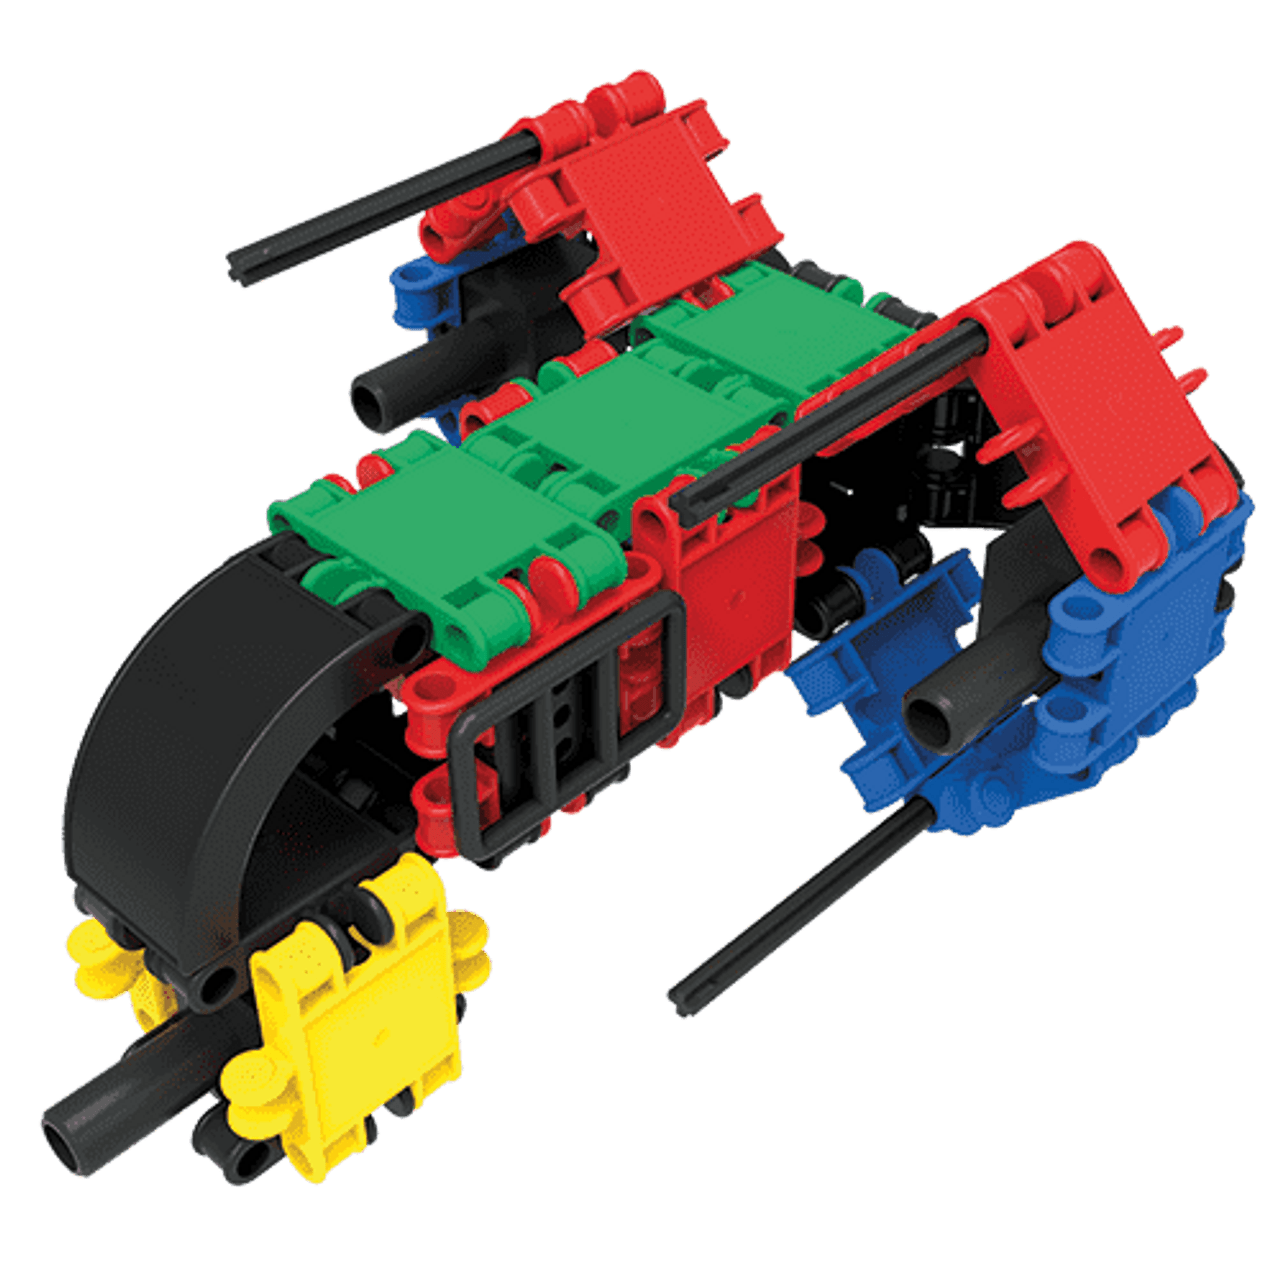 Clics Build & Play Rollerbox Construction Set, 560 Pieces